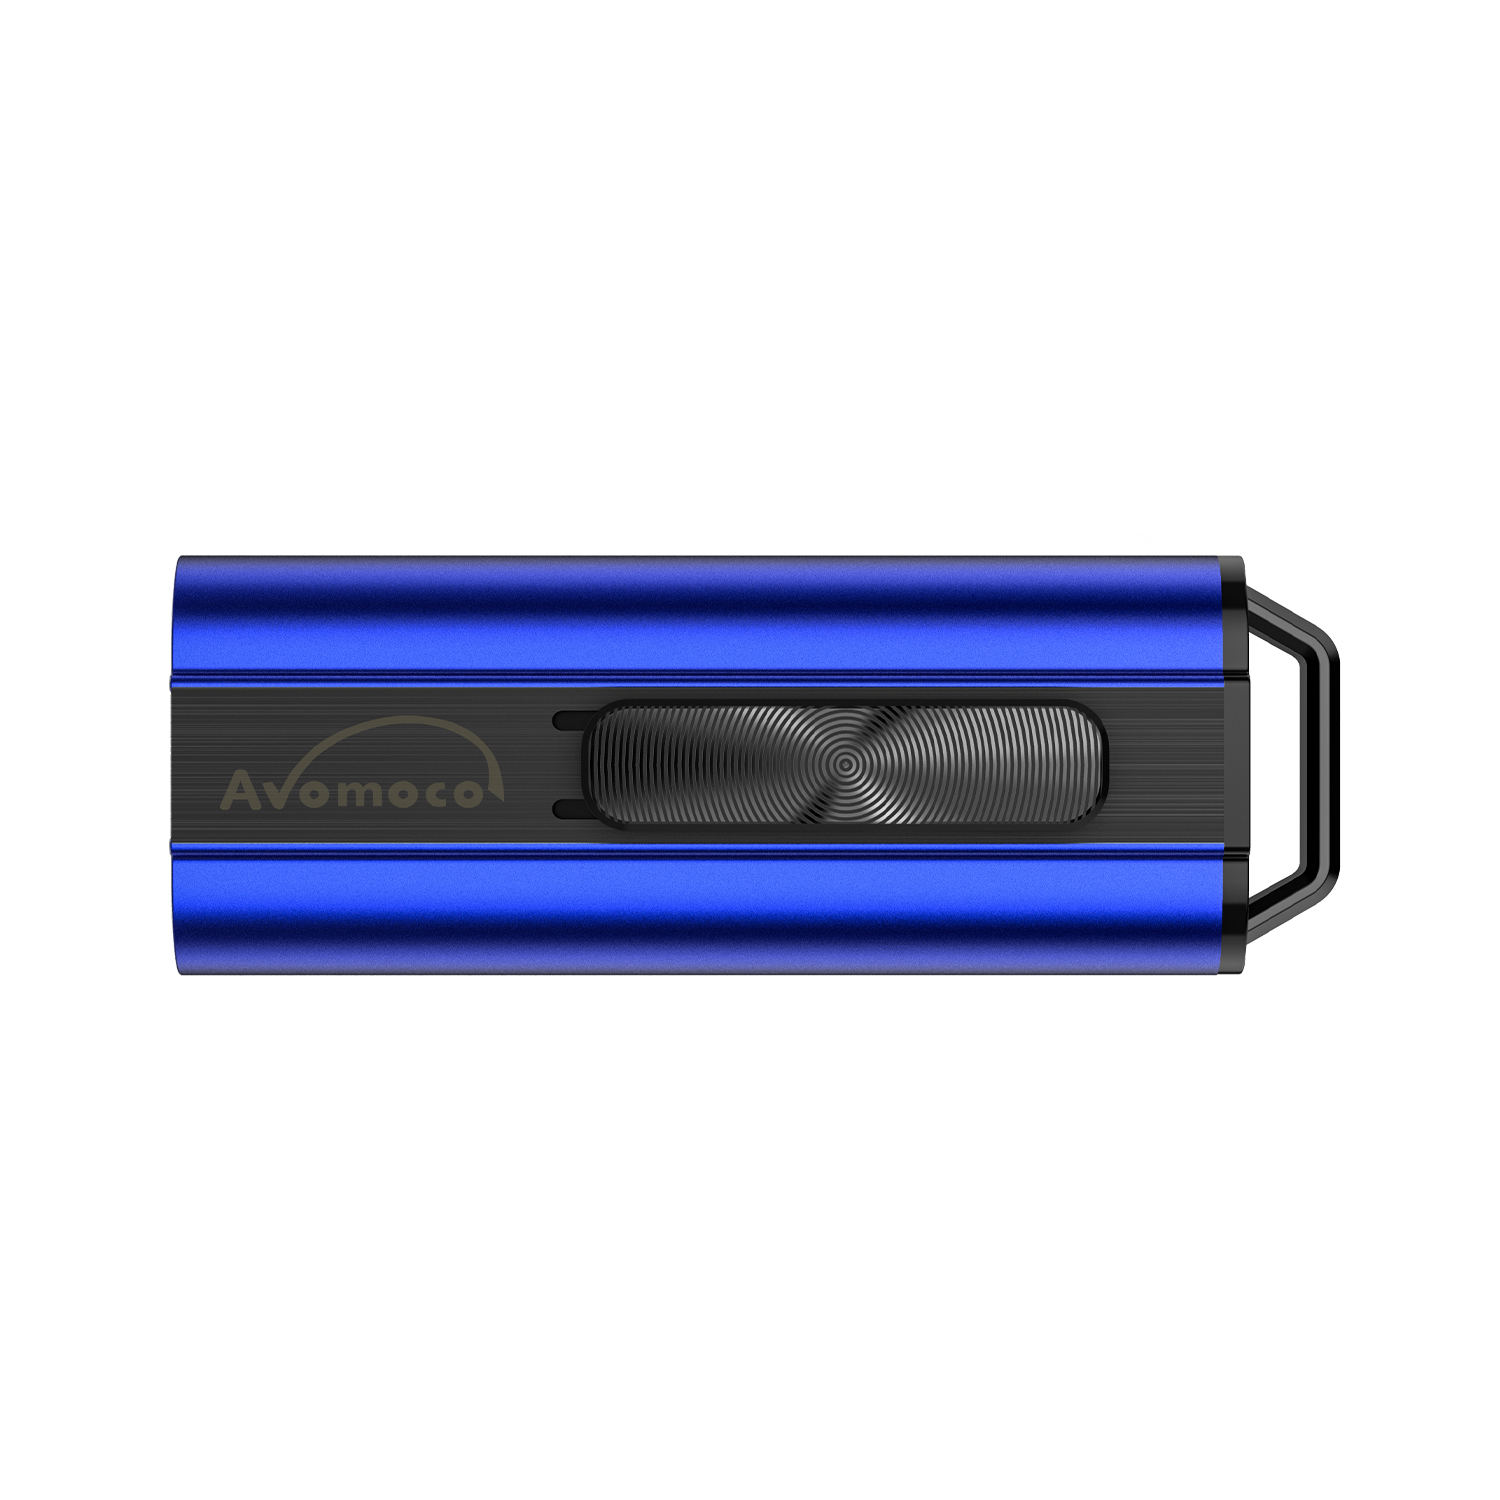 Avomoco-USB 2.0